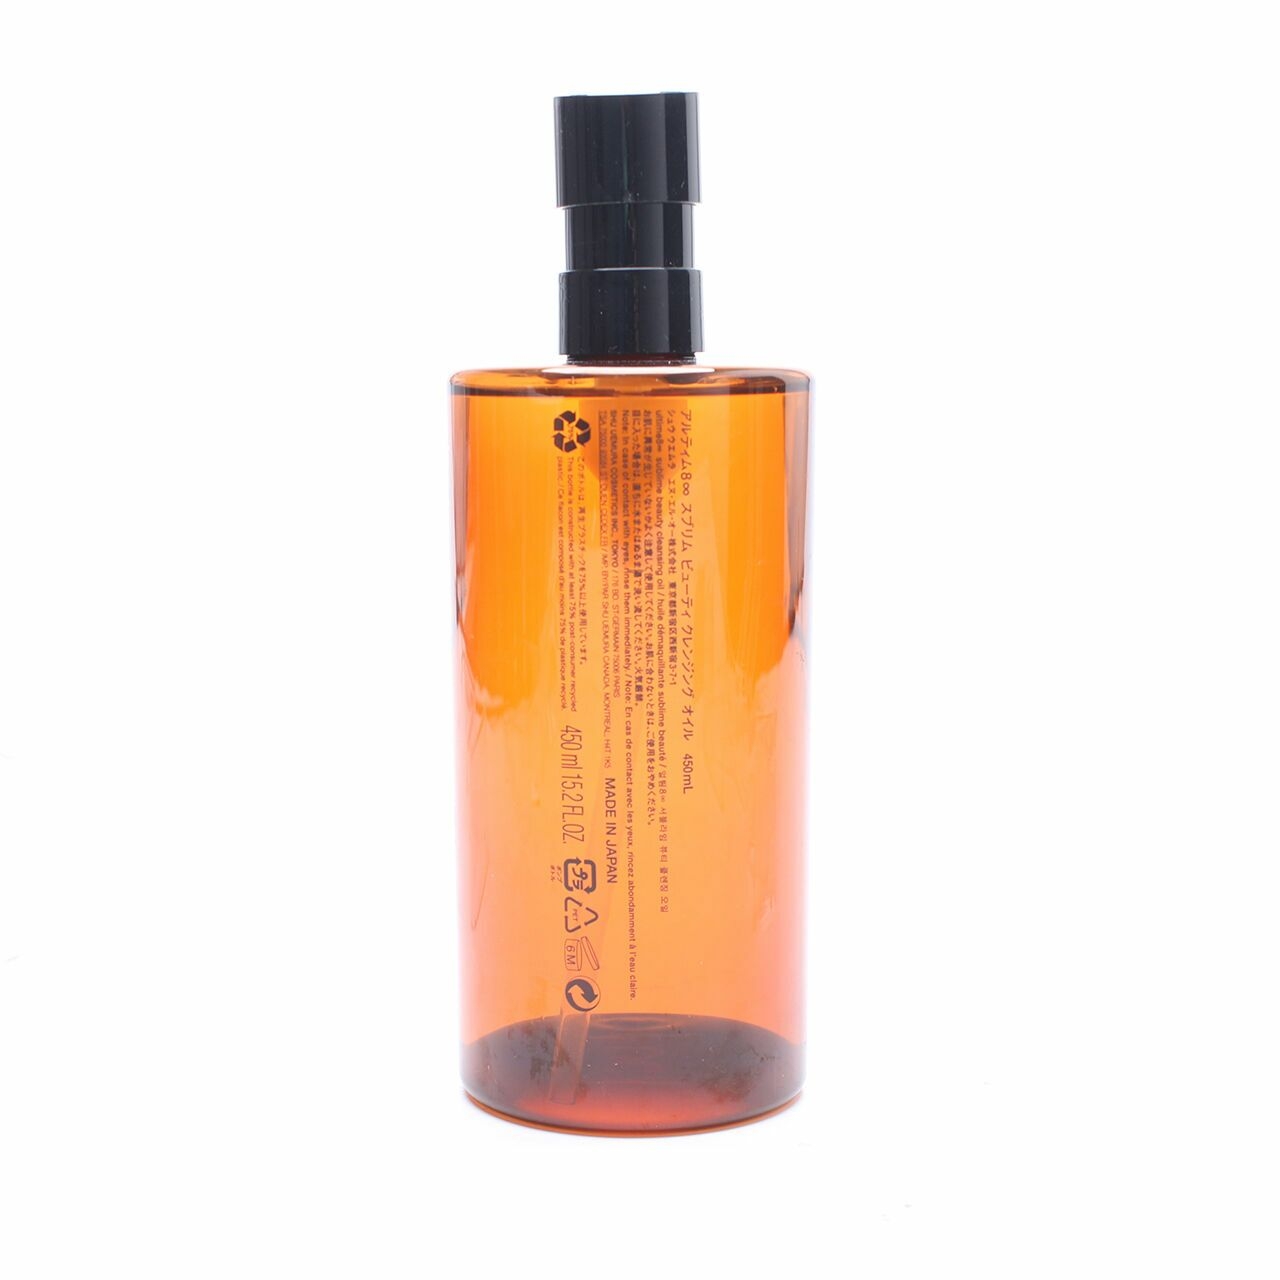 Shu Uemura Skin Purifier Ultime8 Cleansing Oil Sublime BeautySkin Care